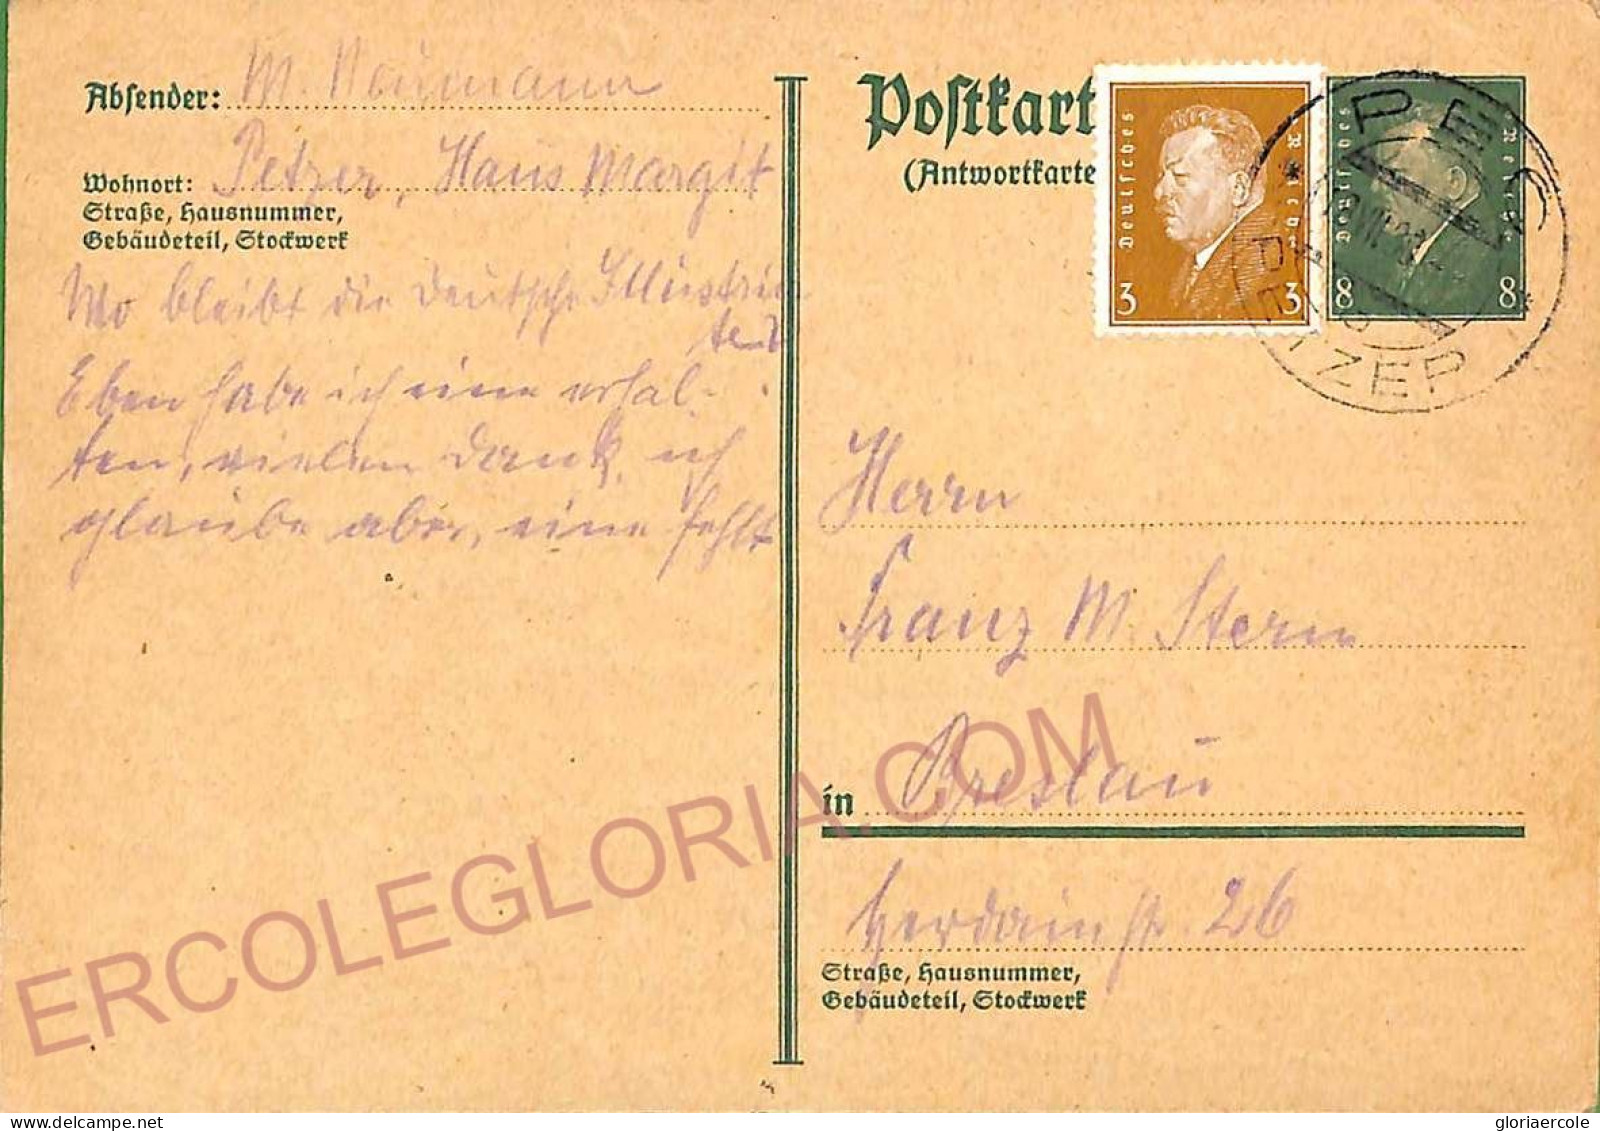 Ad5888 - CZECHOSLOVAKIA Germany - Postal History - STATIONERY CARD From PEC 1938 - Postcards